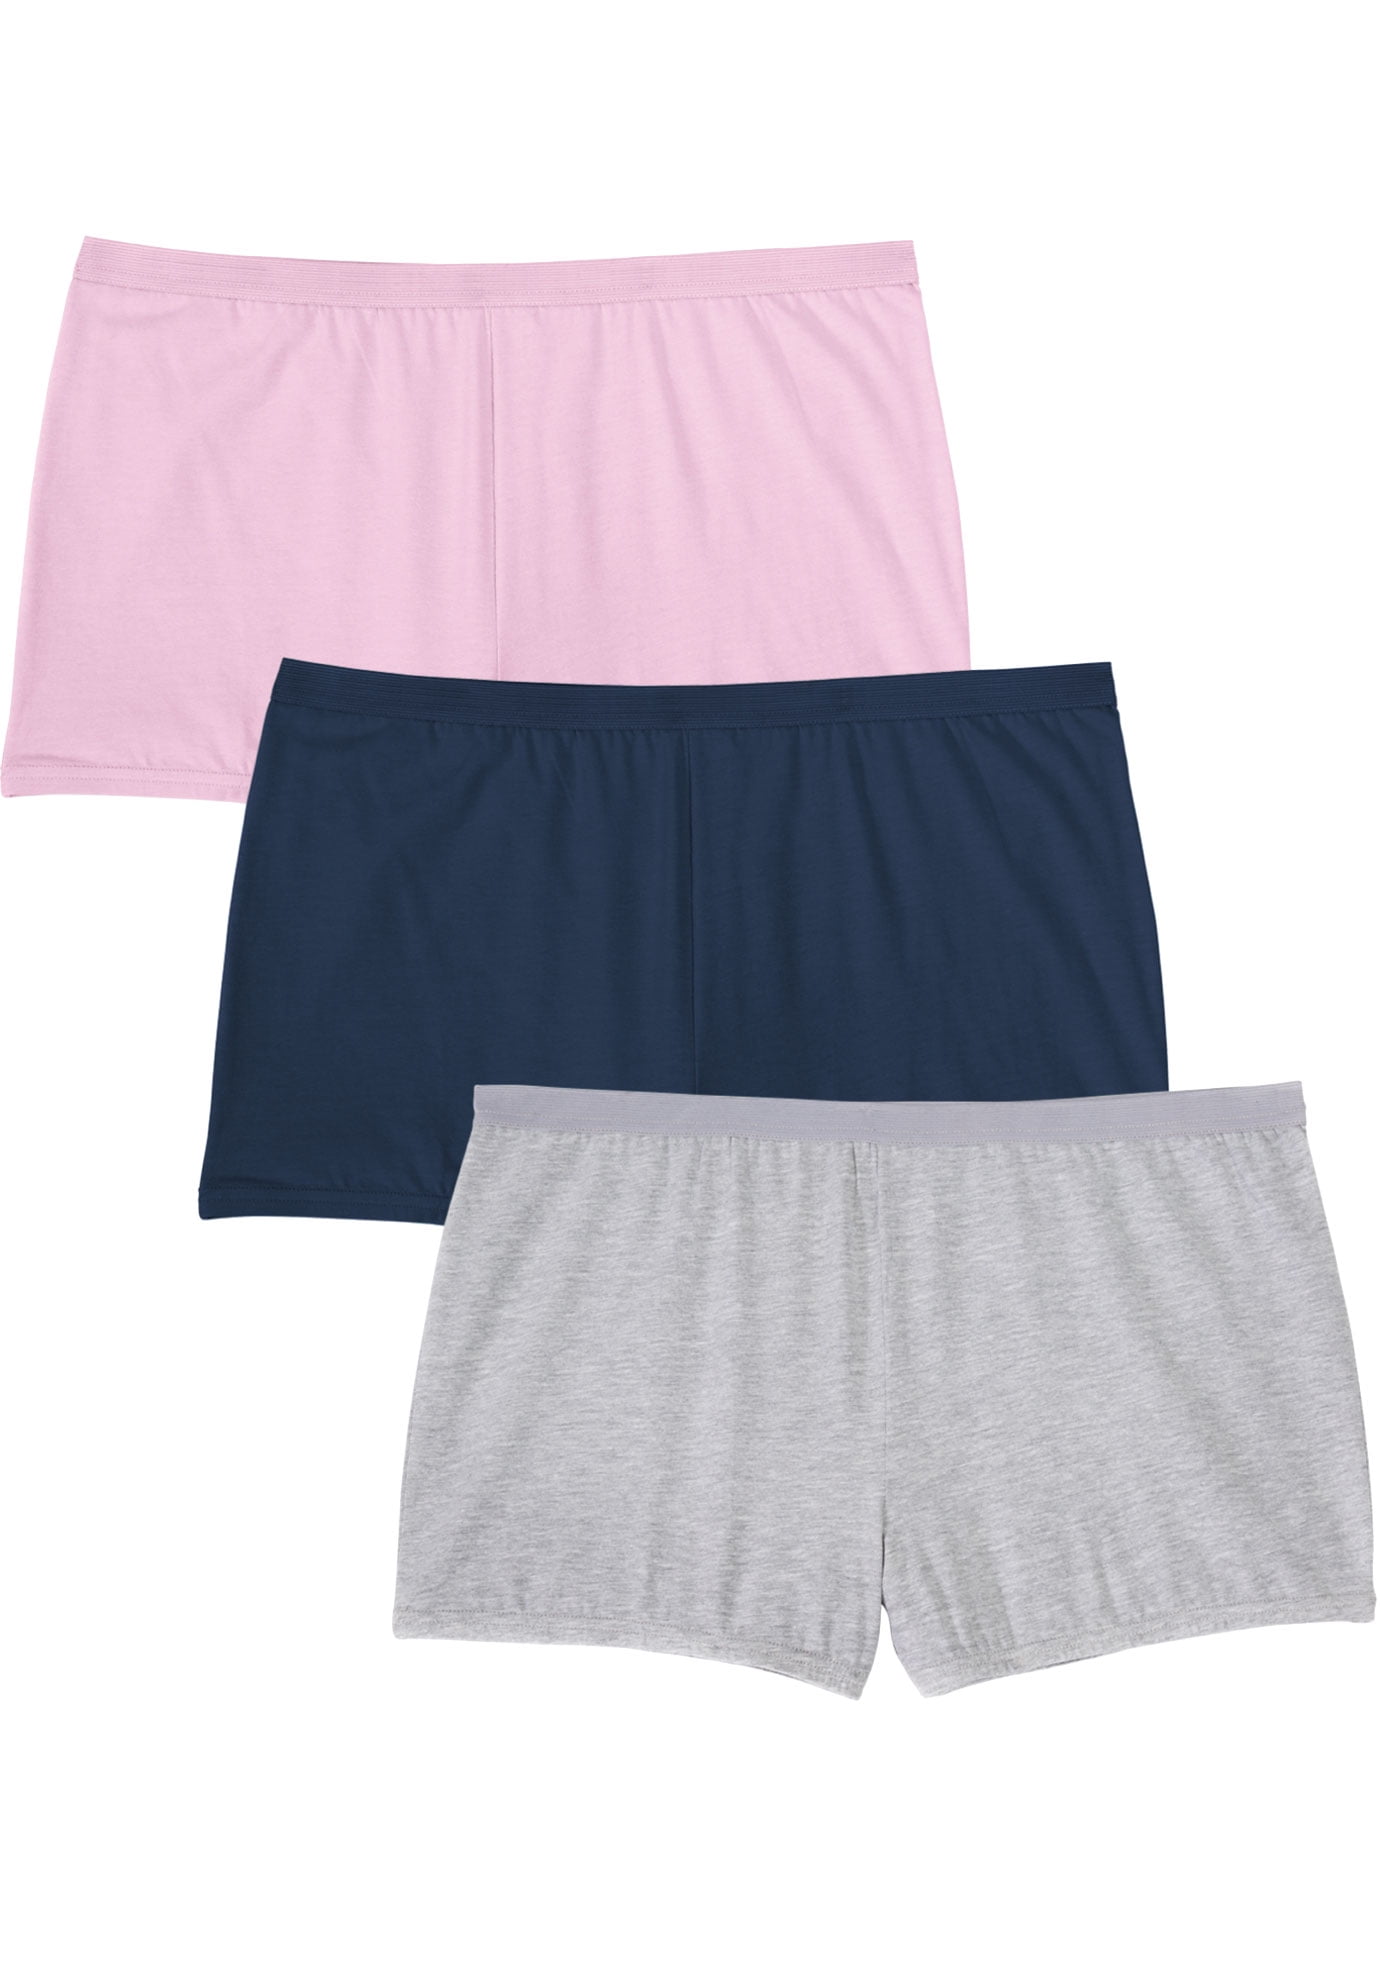 Comfort Choice Women's Plus Size Cotton Boyshort Panty 3-Pack Underwear ...